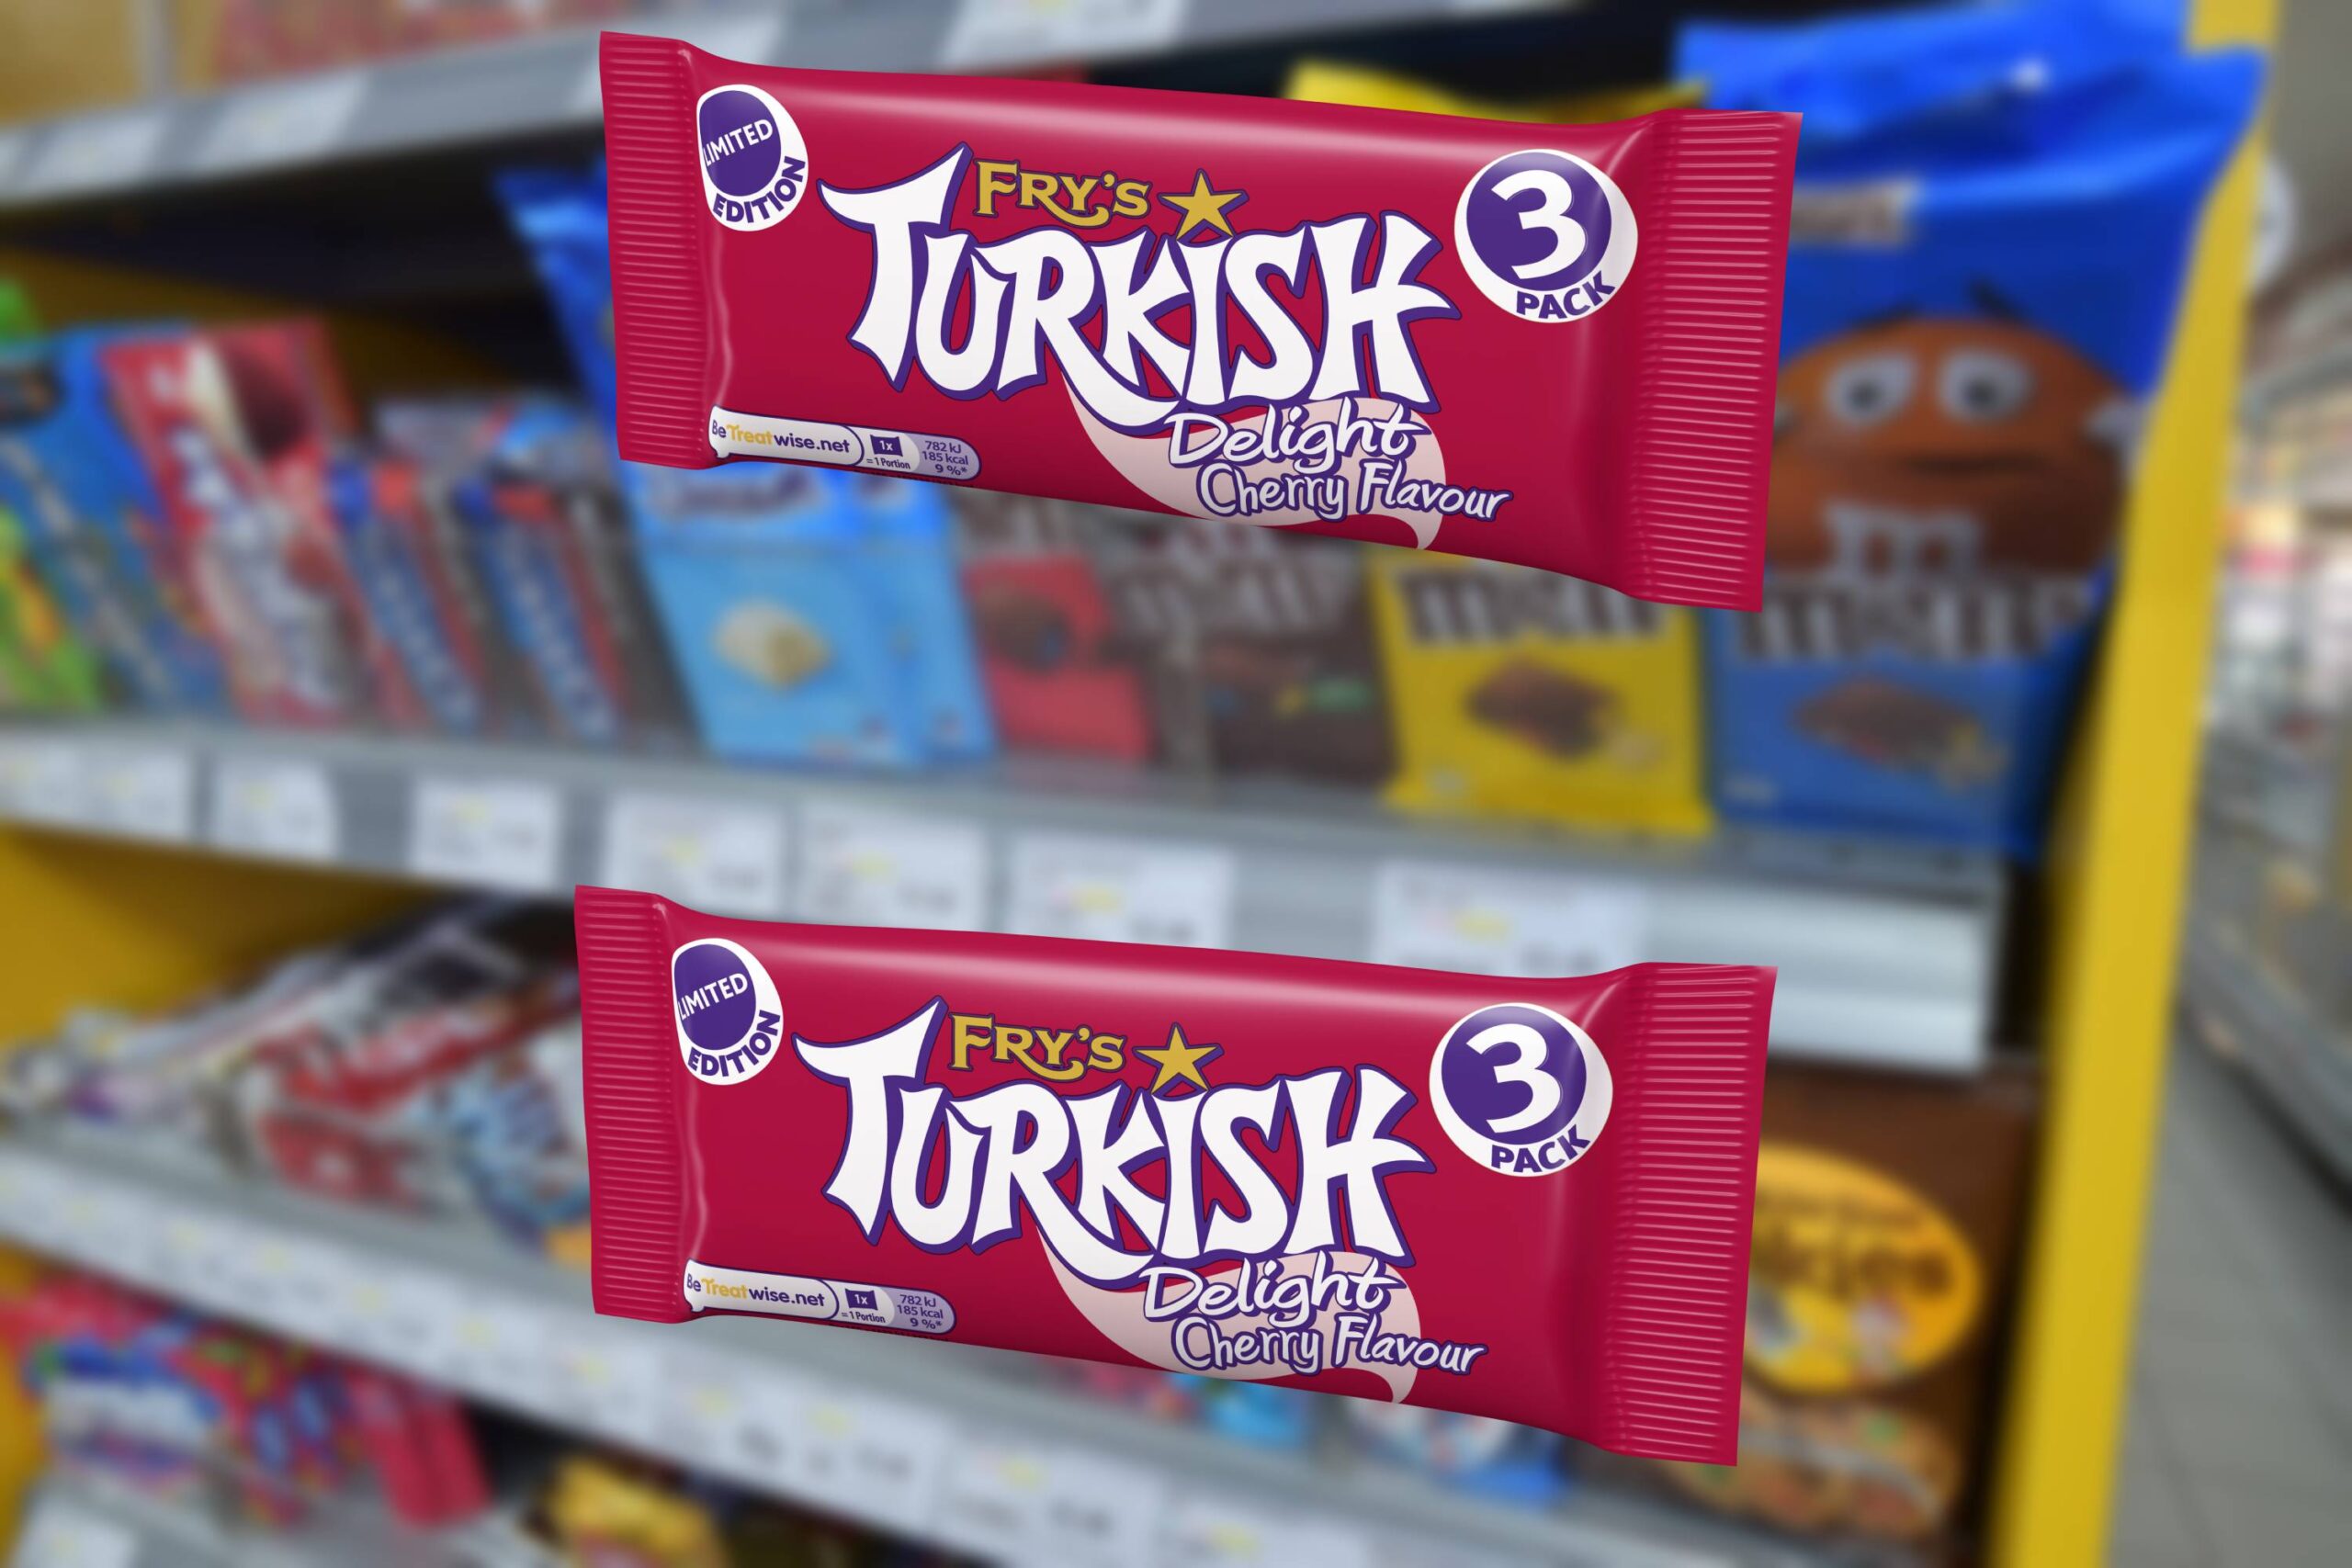 Fry’s Turkish Delight Cherry